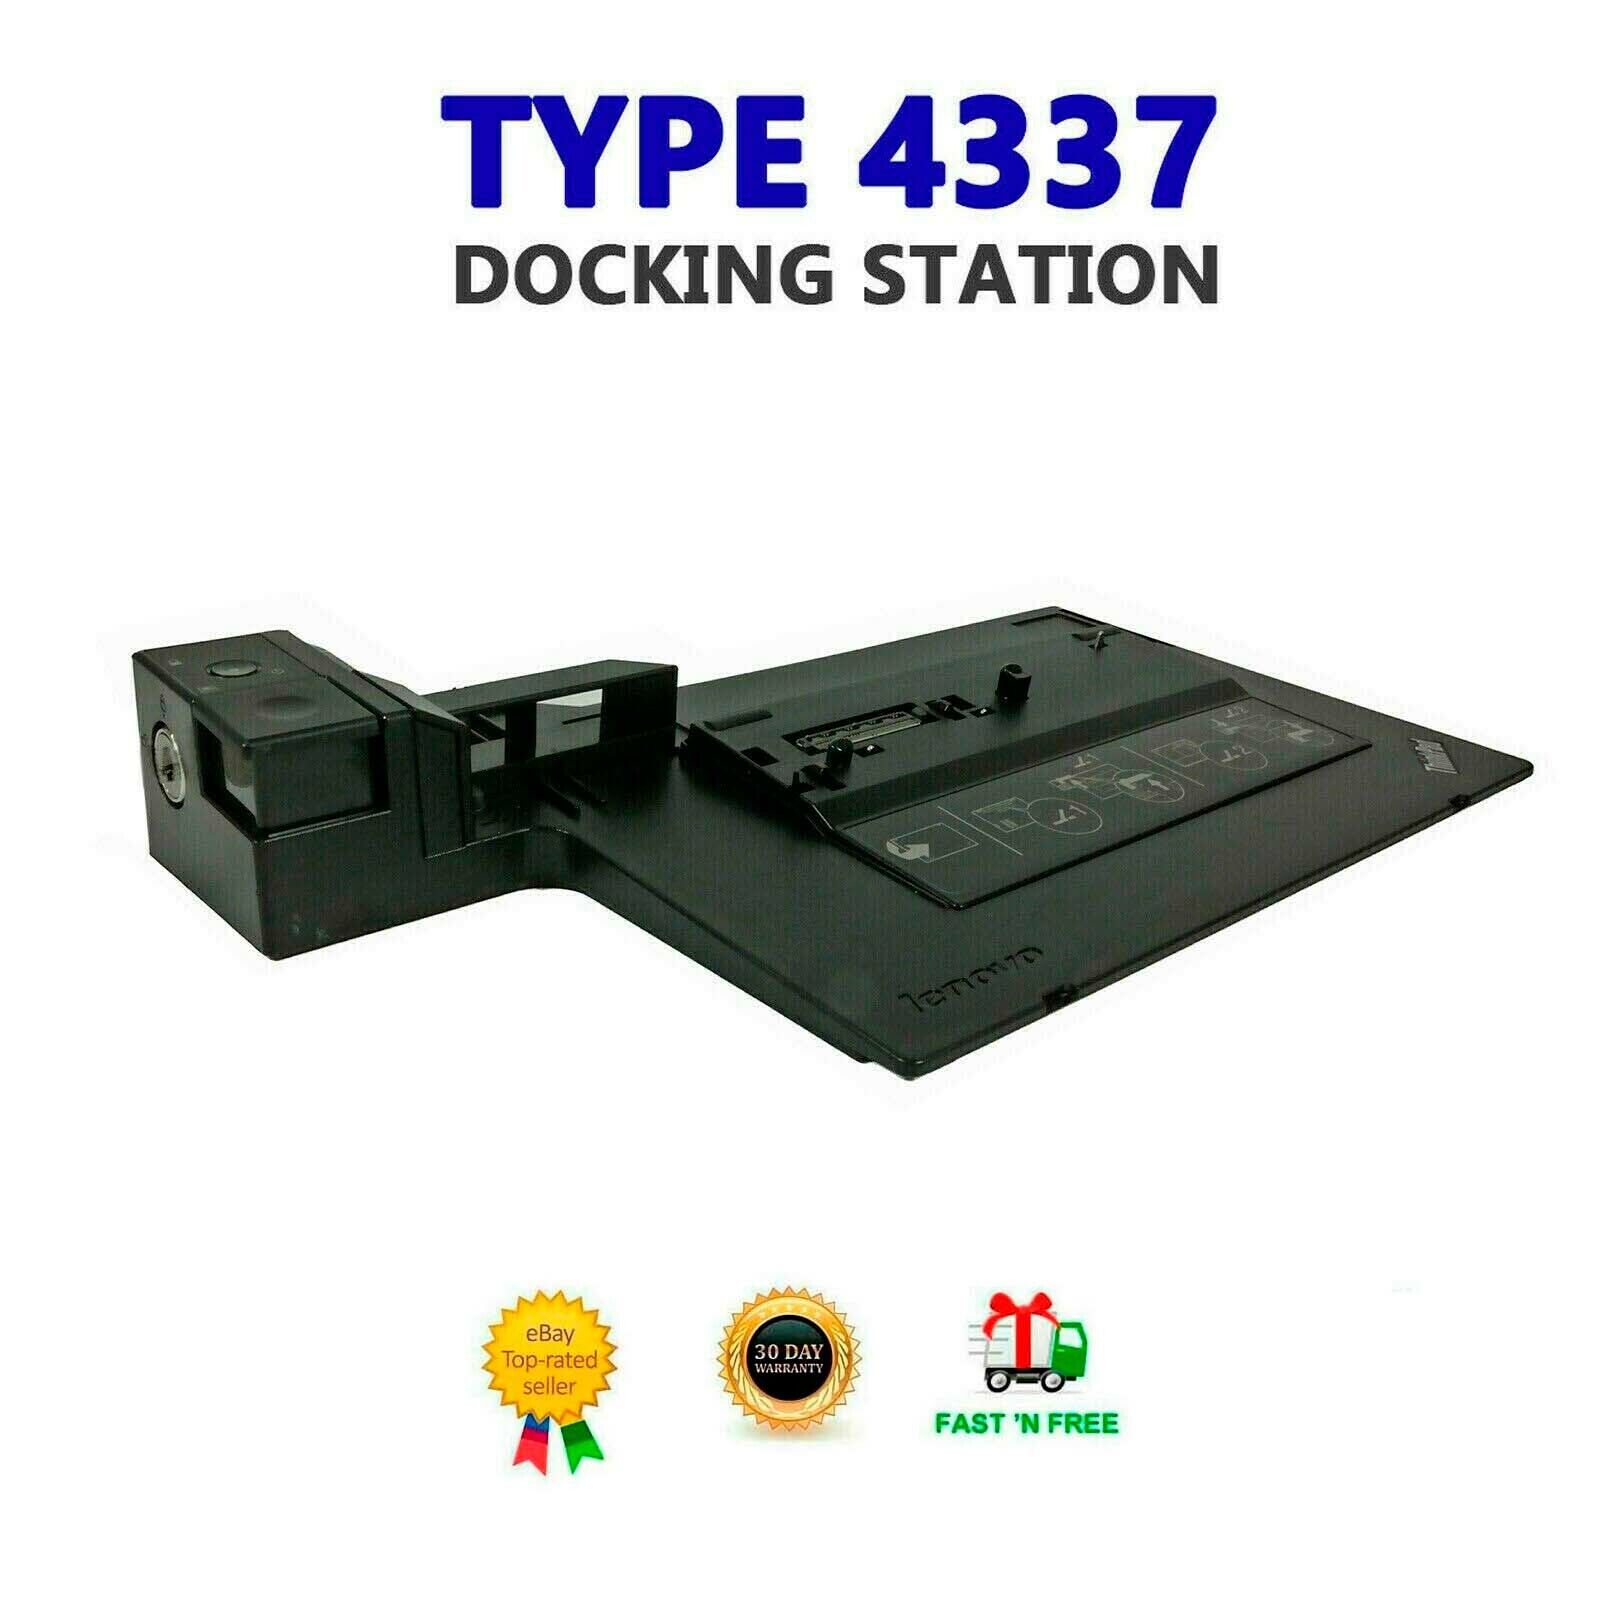 Lenovo ThinkPad Mini Dock Series 3 Type 4337 Dock Station for X220 Laptop